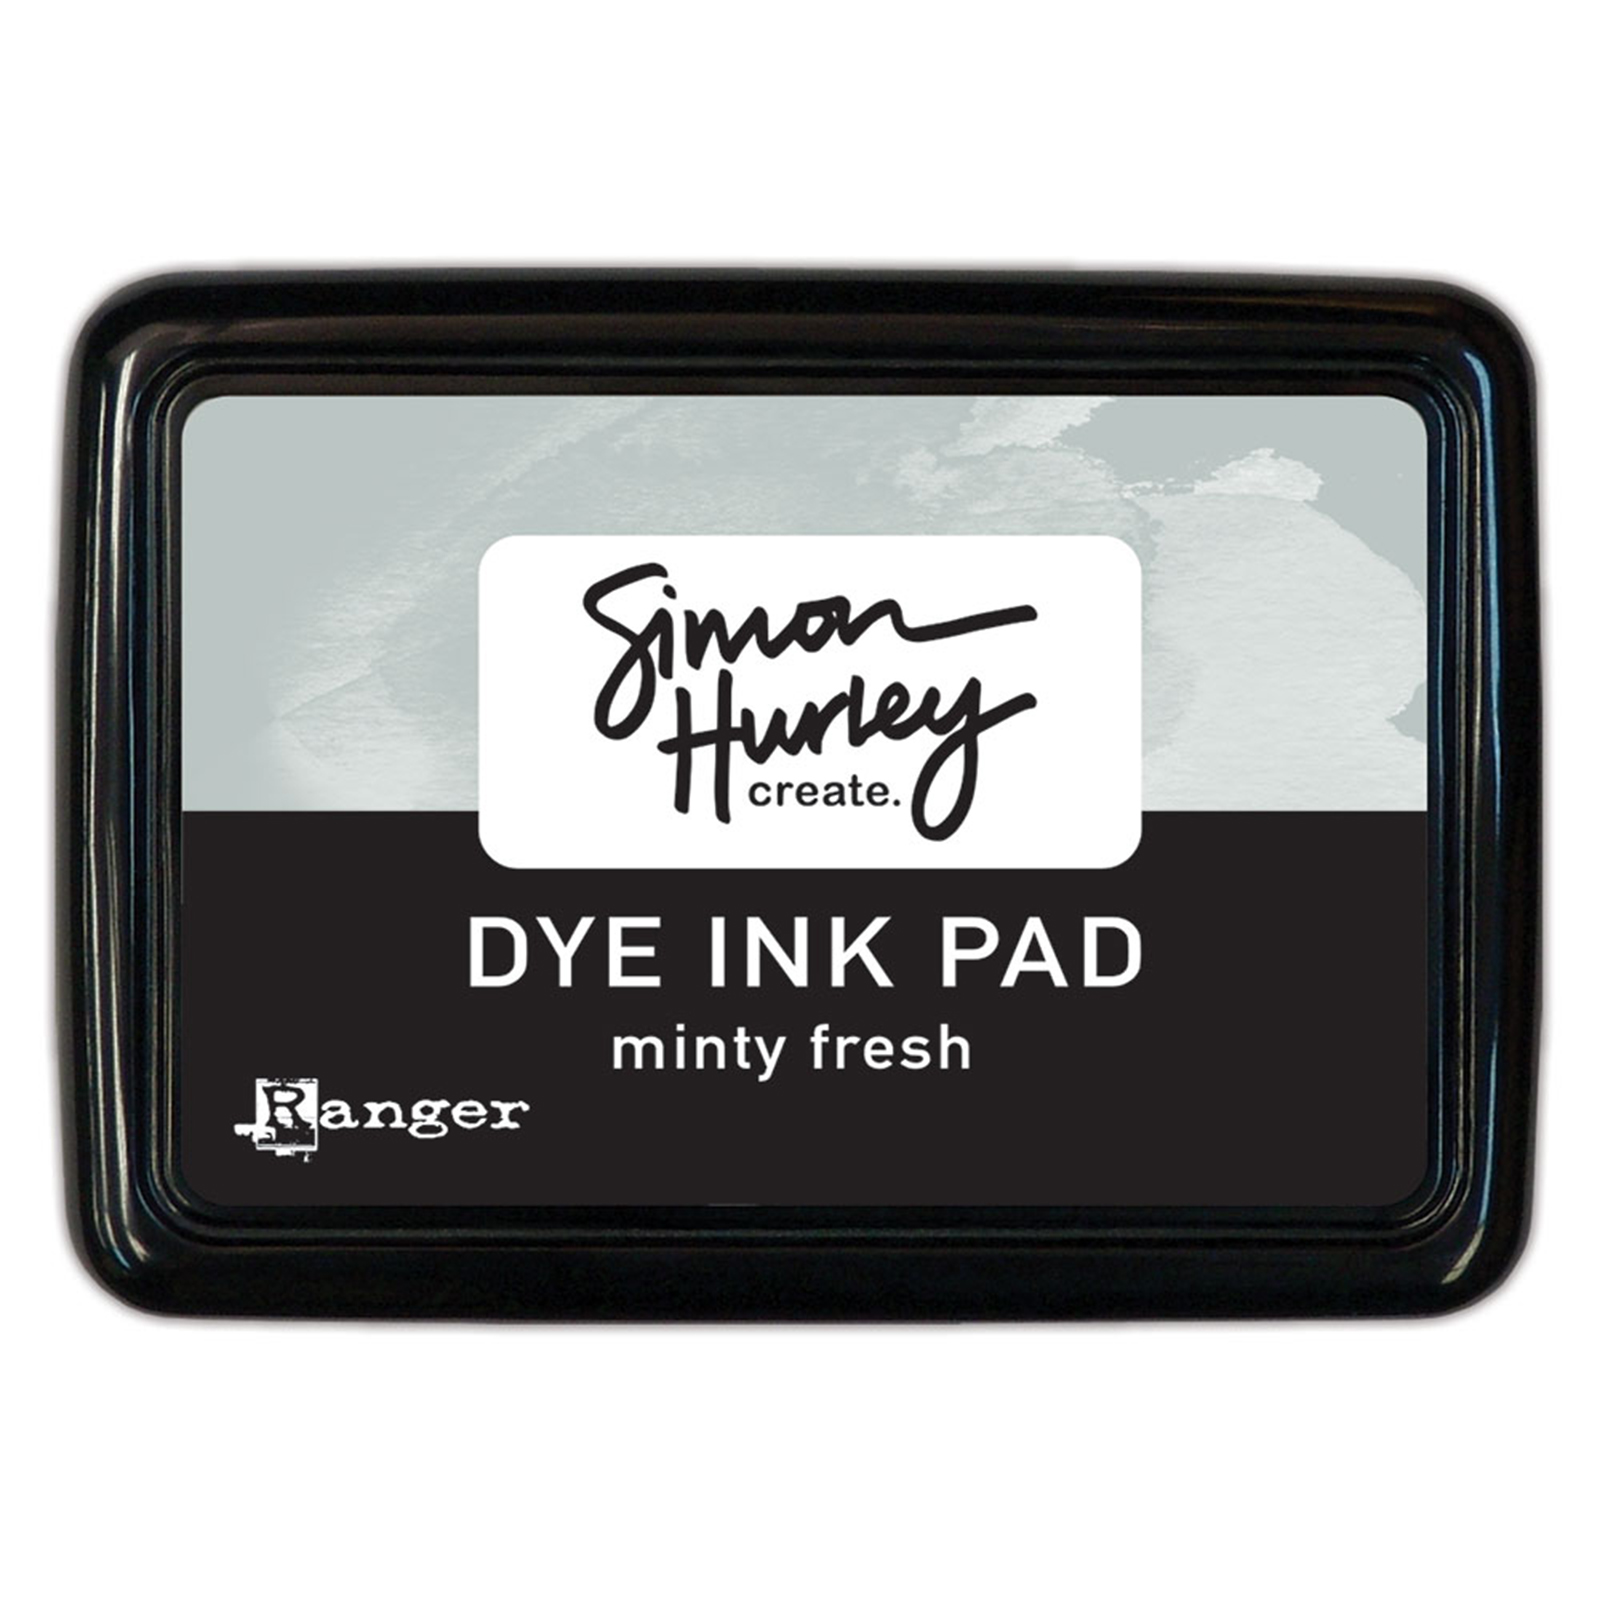 Ranger • Dye ink pad Minty fresh